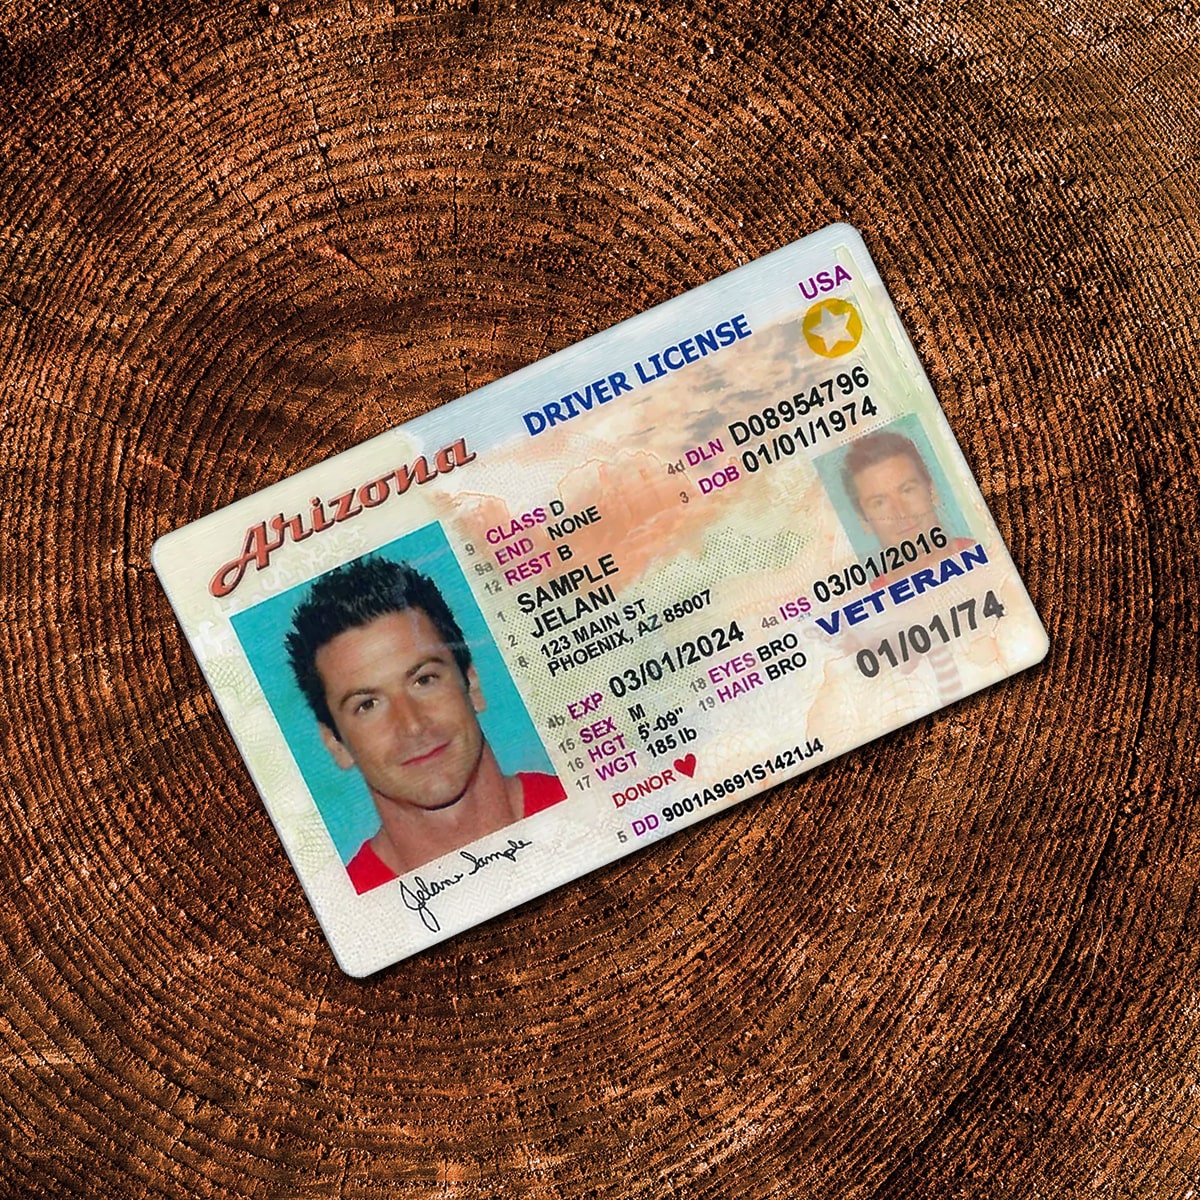 arizona driver's license address change